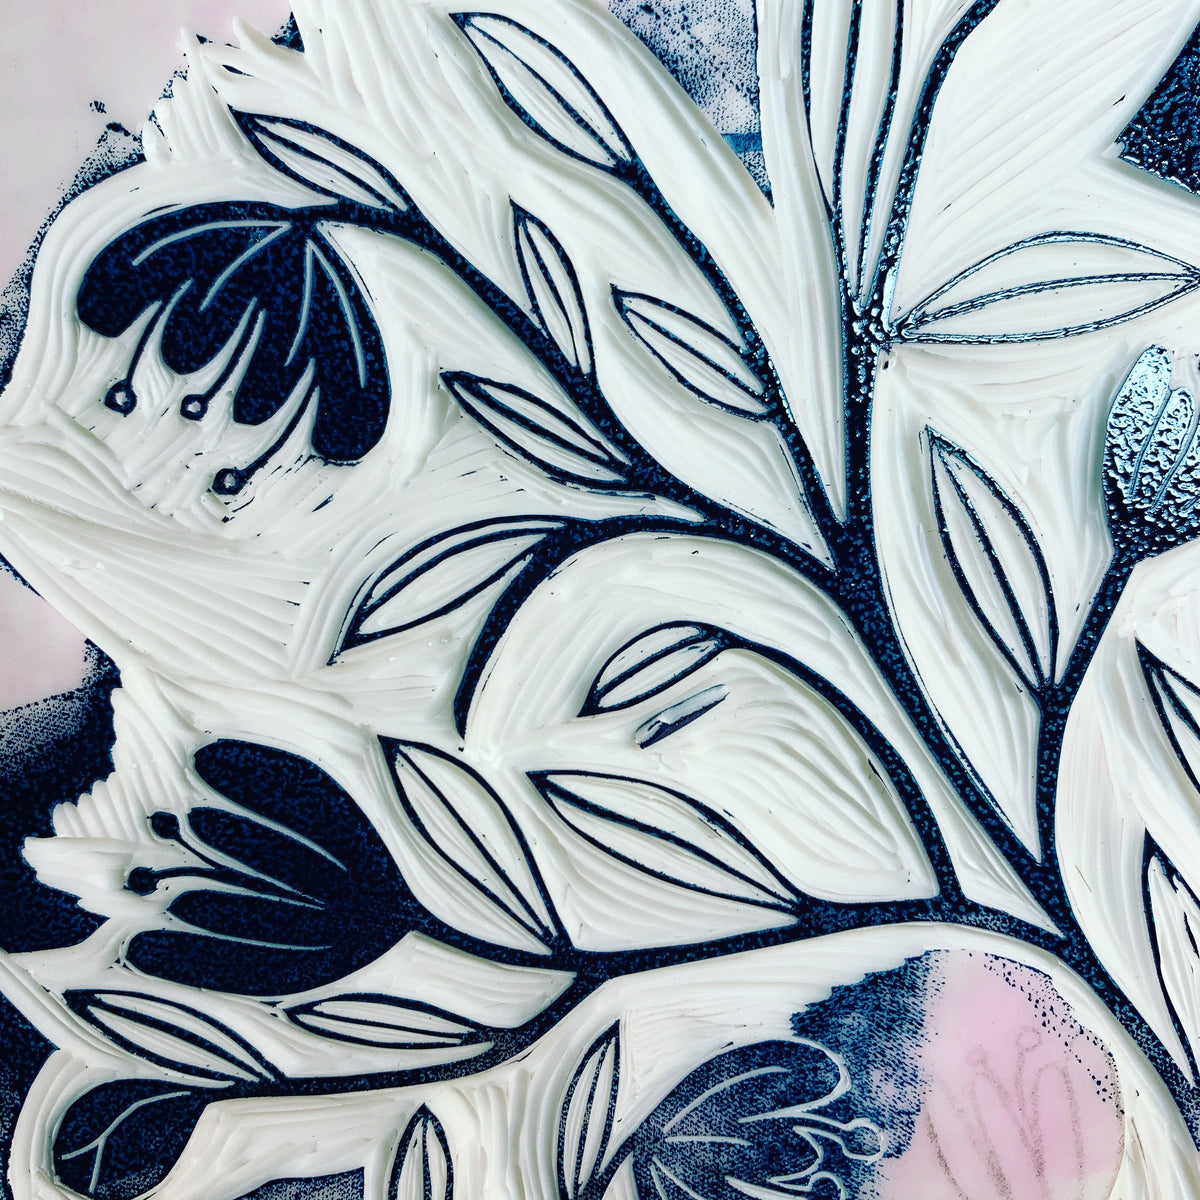 Flowers and heart linoprint, original artwork, handmade in Sydney